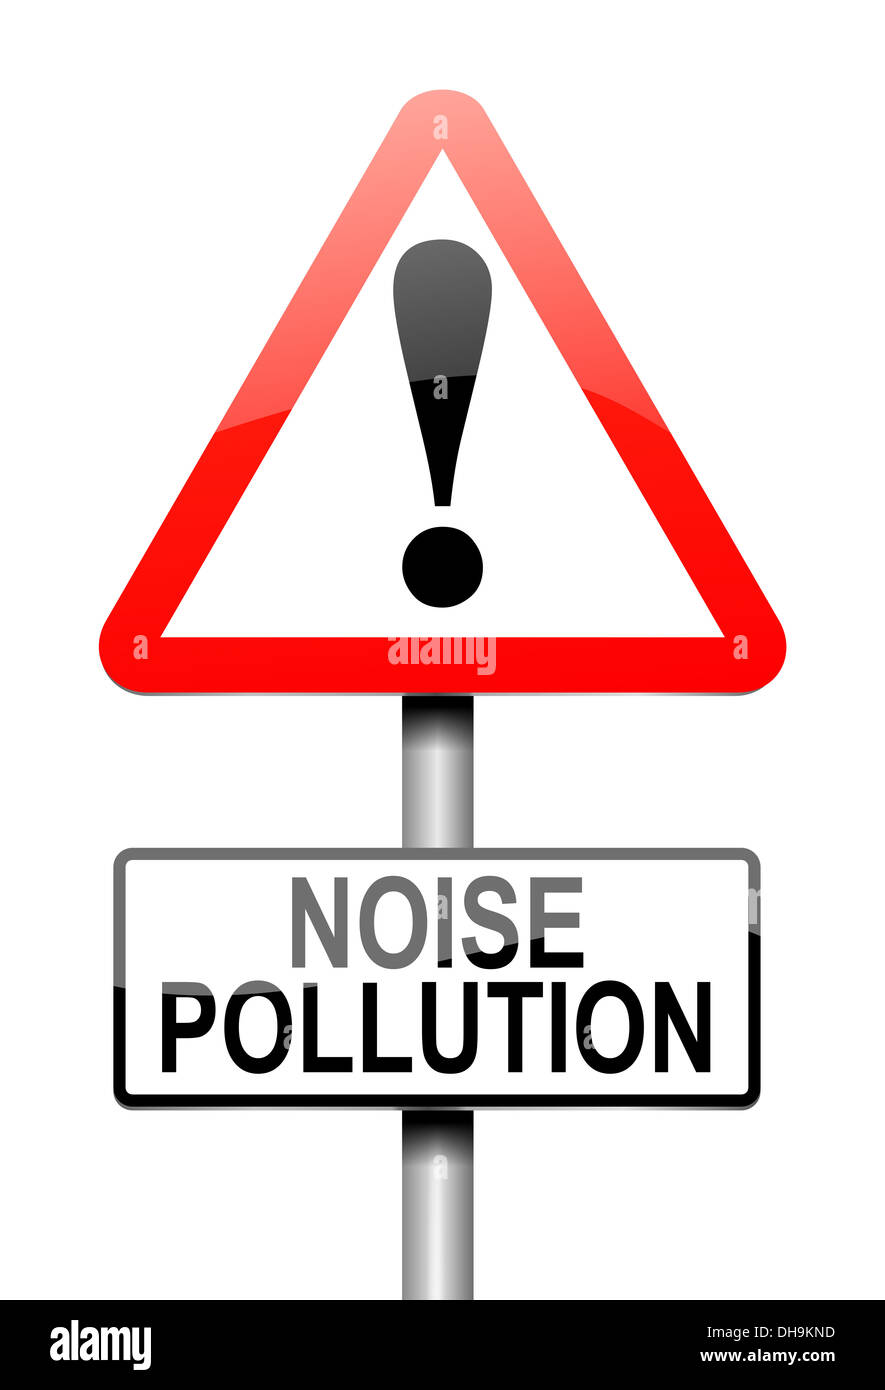 Noise pollution concept Stock Photo - Alamy